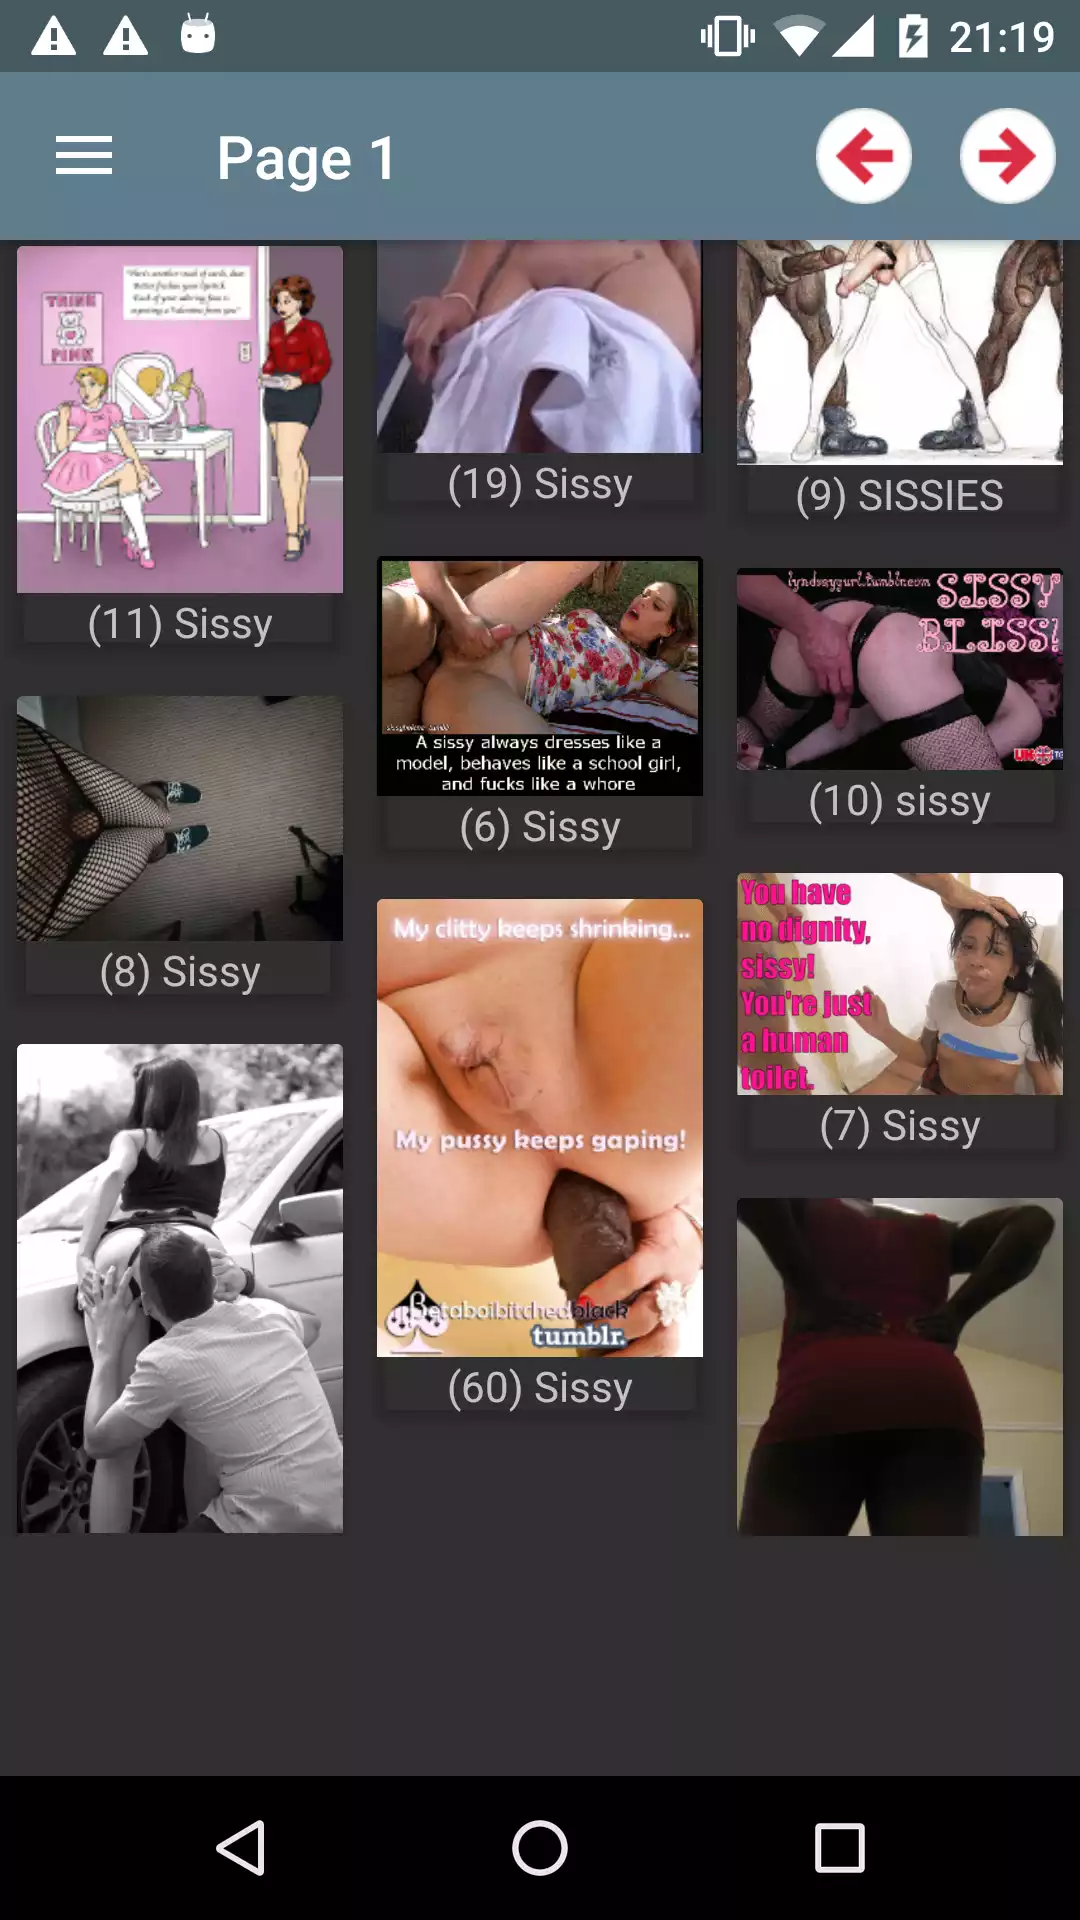 Femboy Galleries photos,pics,apps,hentei,image,anime,pict,porn,pick,beta,pictures,apks,hentai,adult,hot,app,hetai,sissy,gallery,sexy,apk